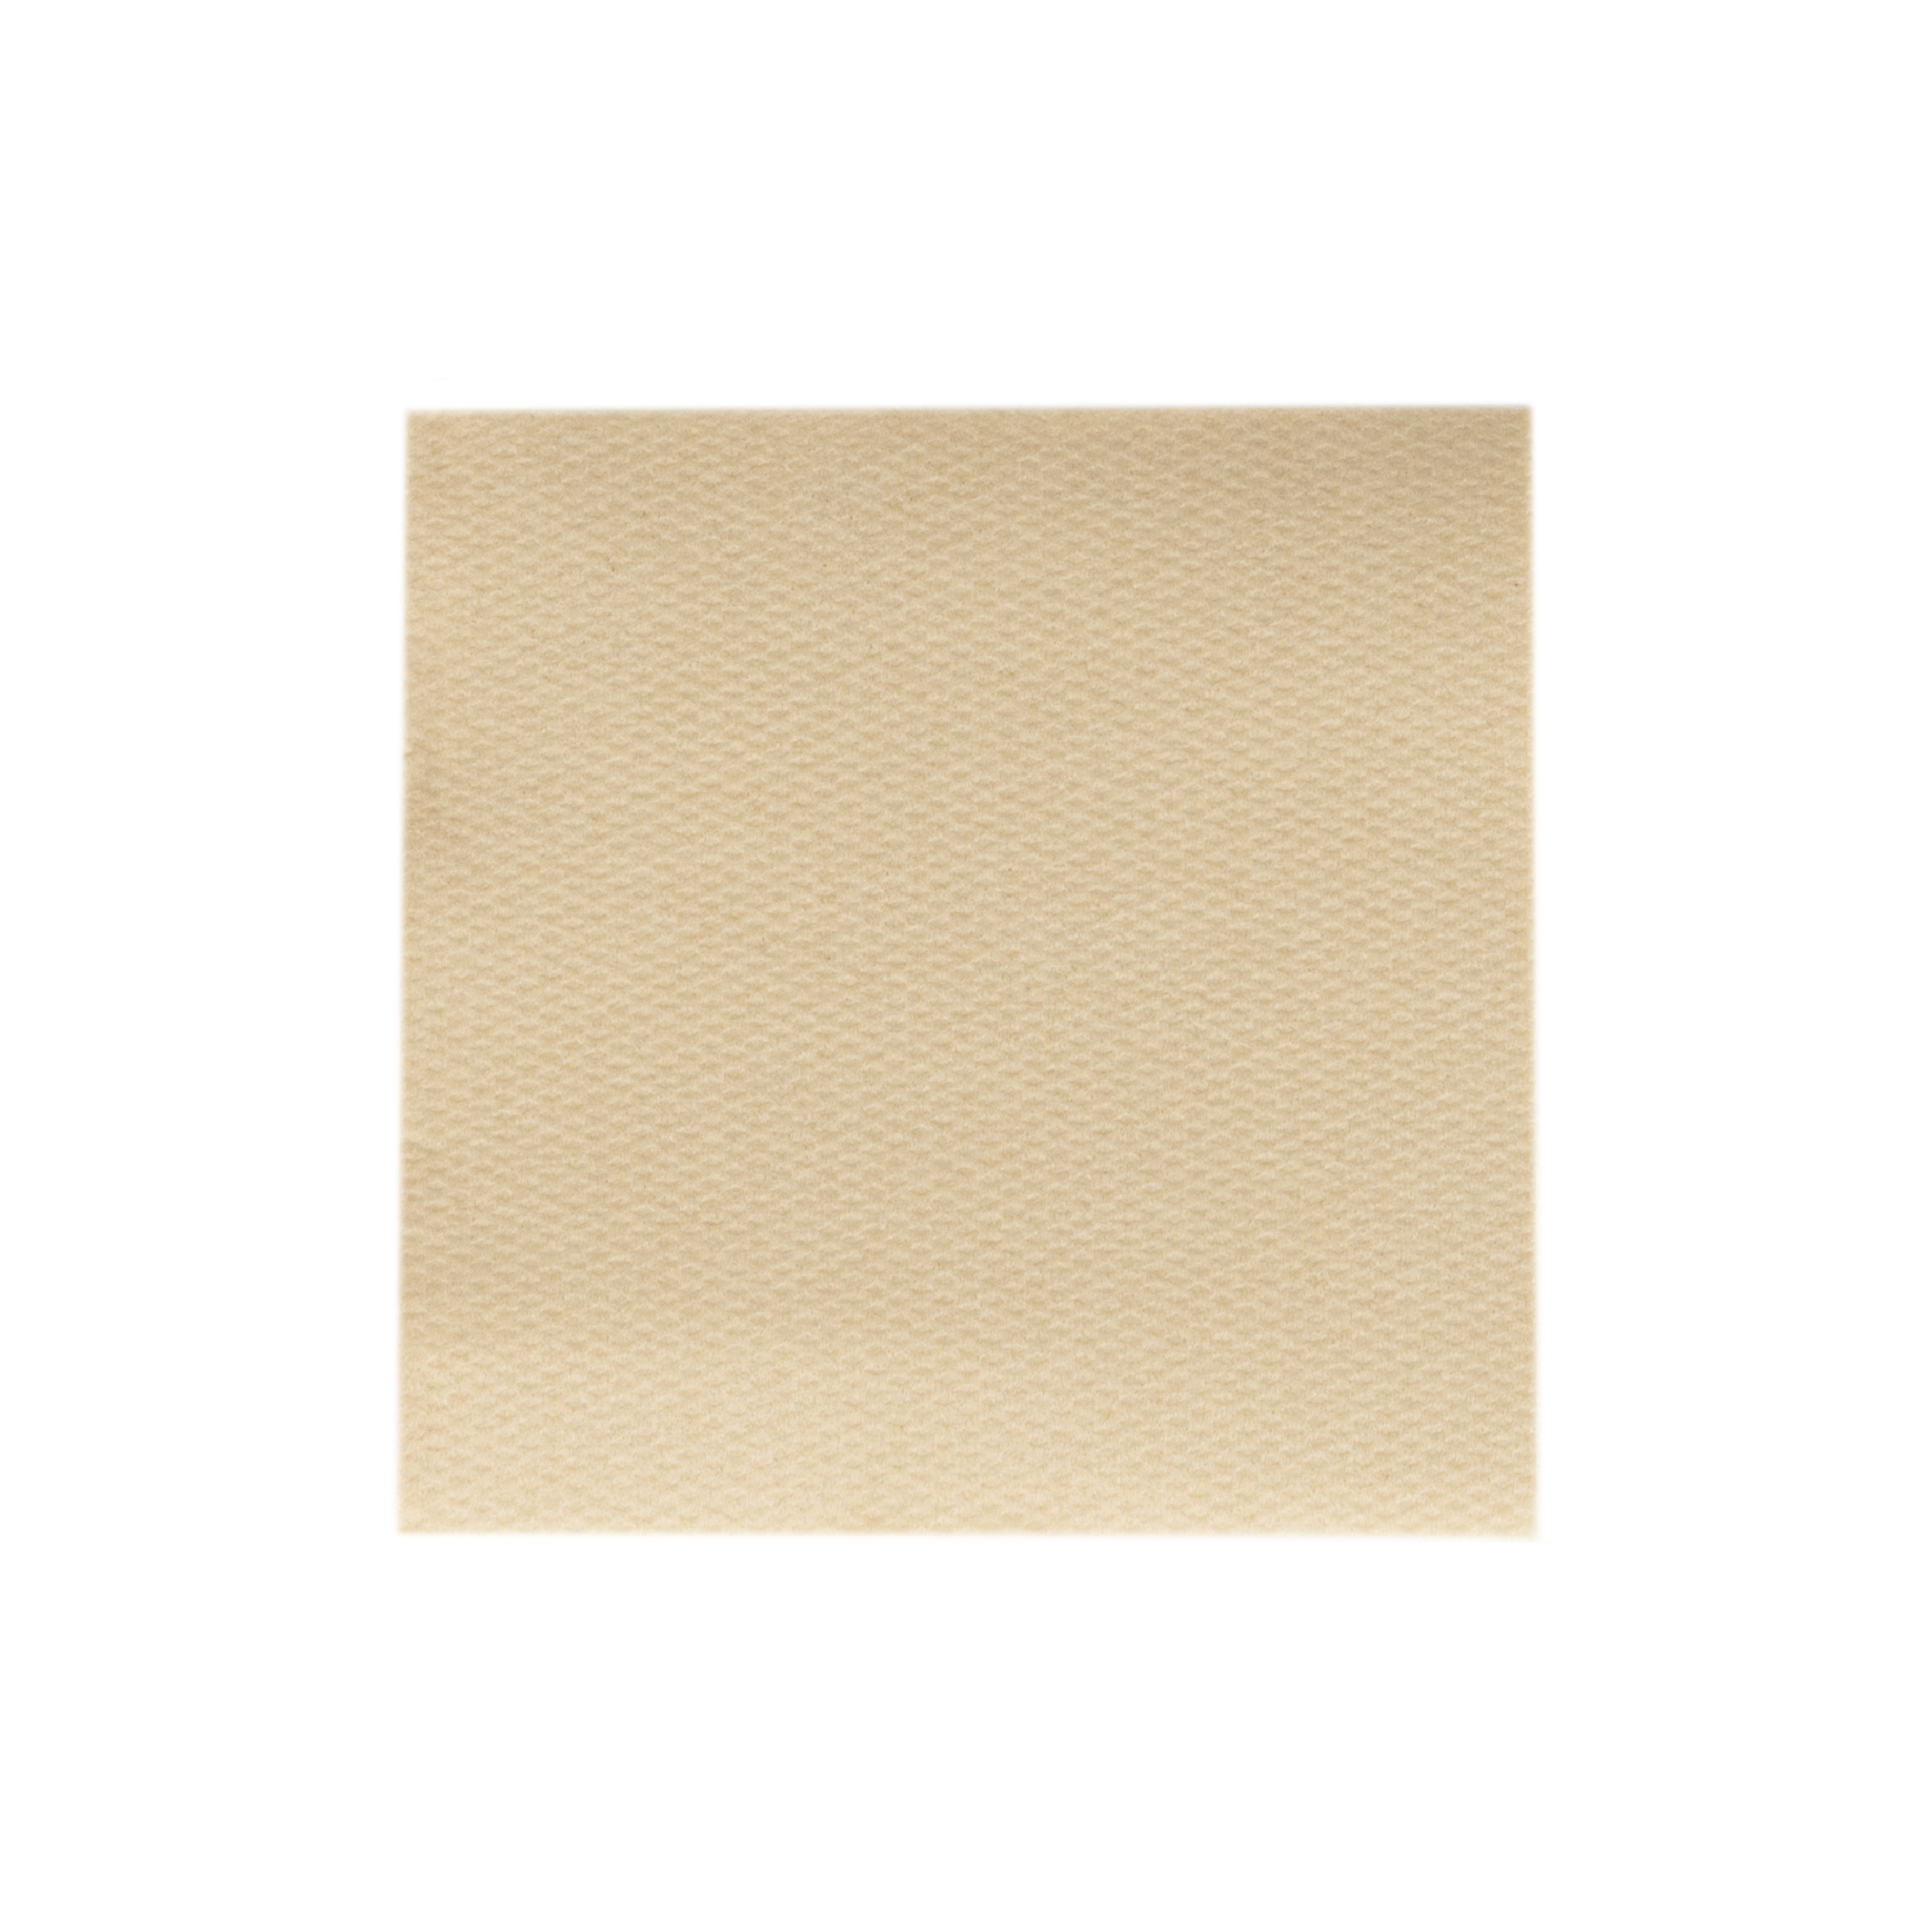 Mank Serviette Softpoint 1/4 Falz, 17 x 17 cm, Basic sand